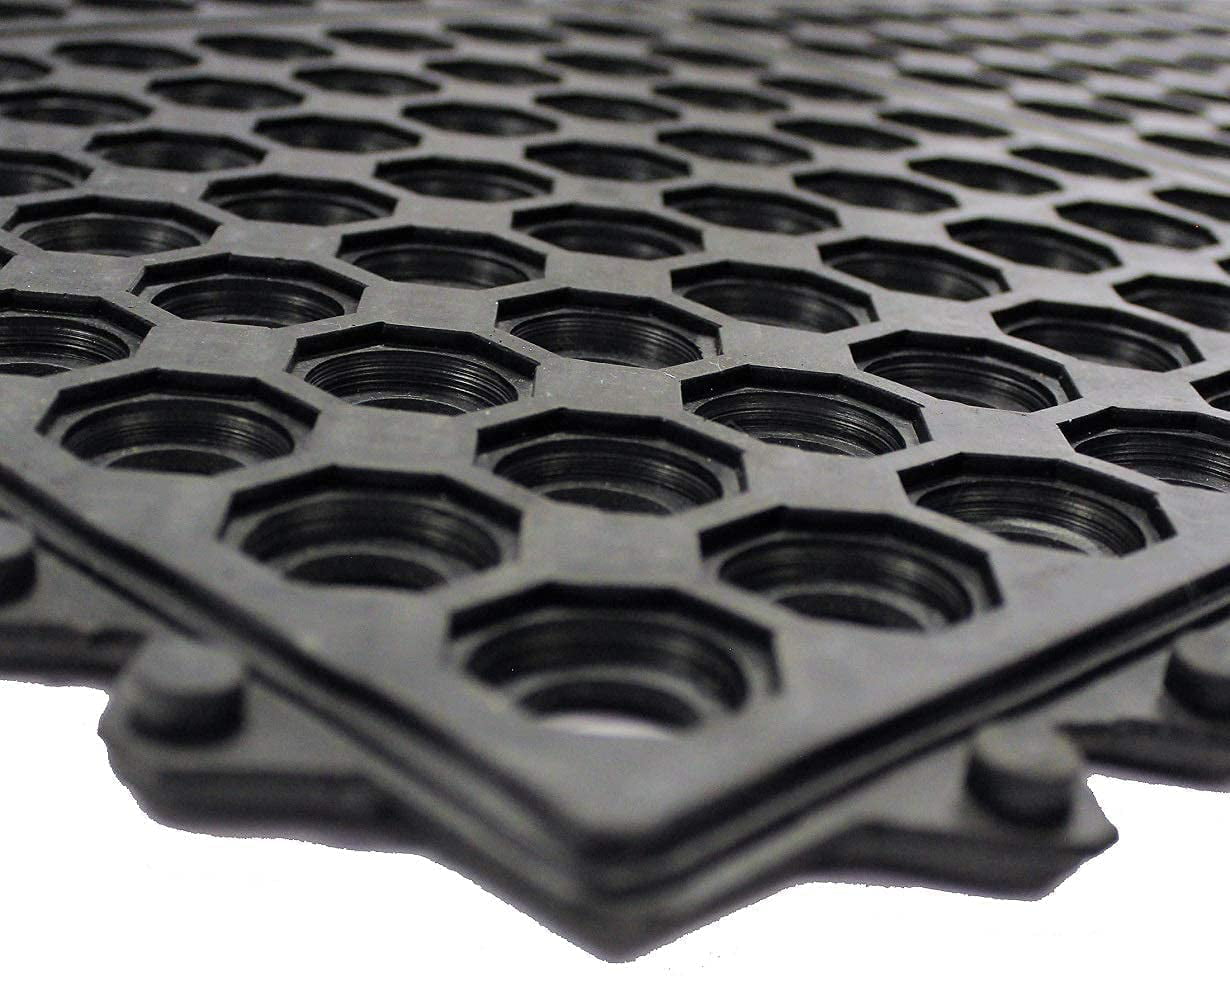 Envelor Anti Fatigue Rubber Floor Mat Non-Slip Restaurant Mat for Floors Bar  Drainage Mat Doormat Utility Garage Home Slip Pool Entry 36 x 60 Inches -  Yahoo Shopping